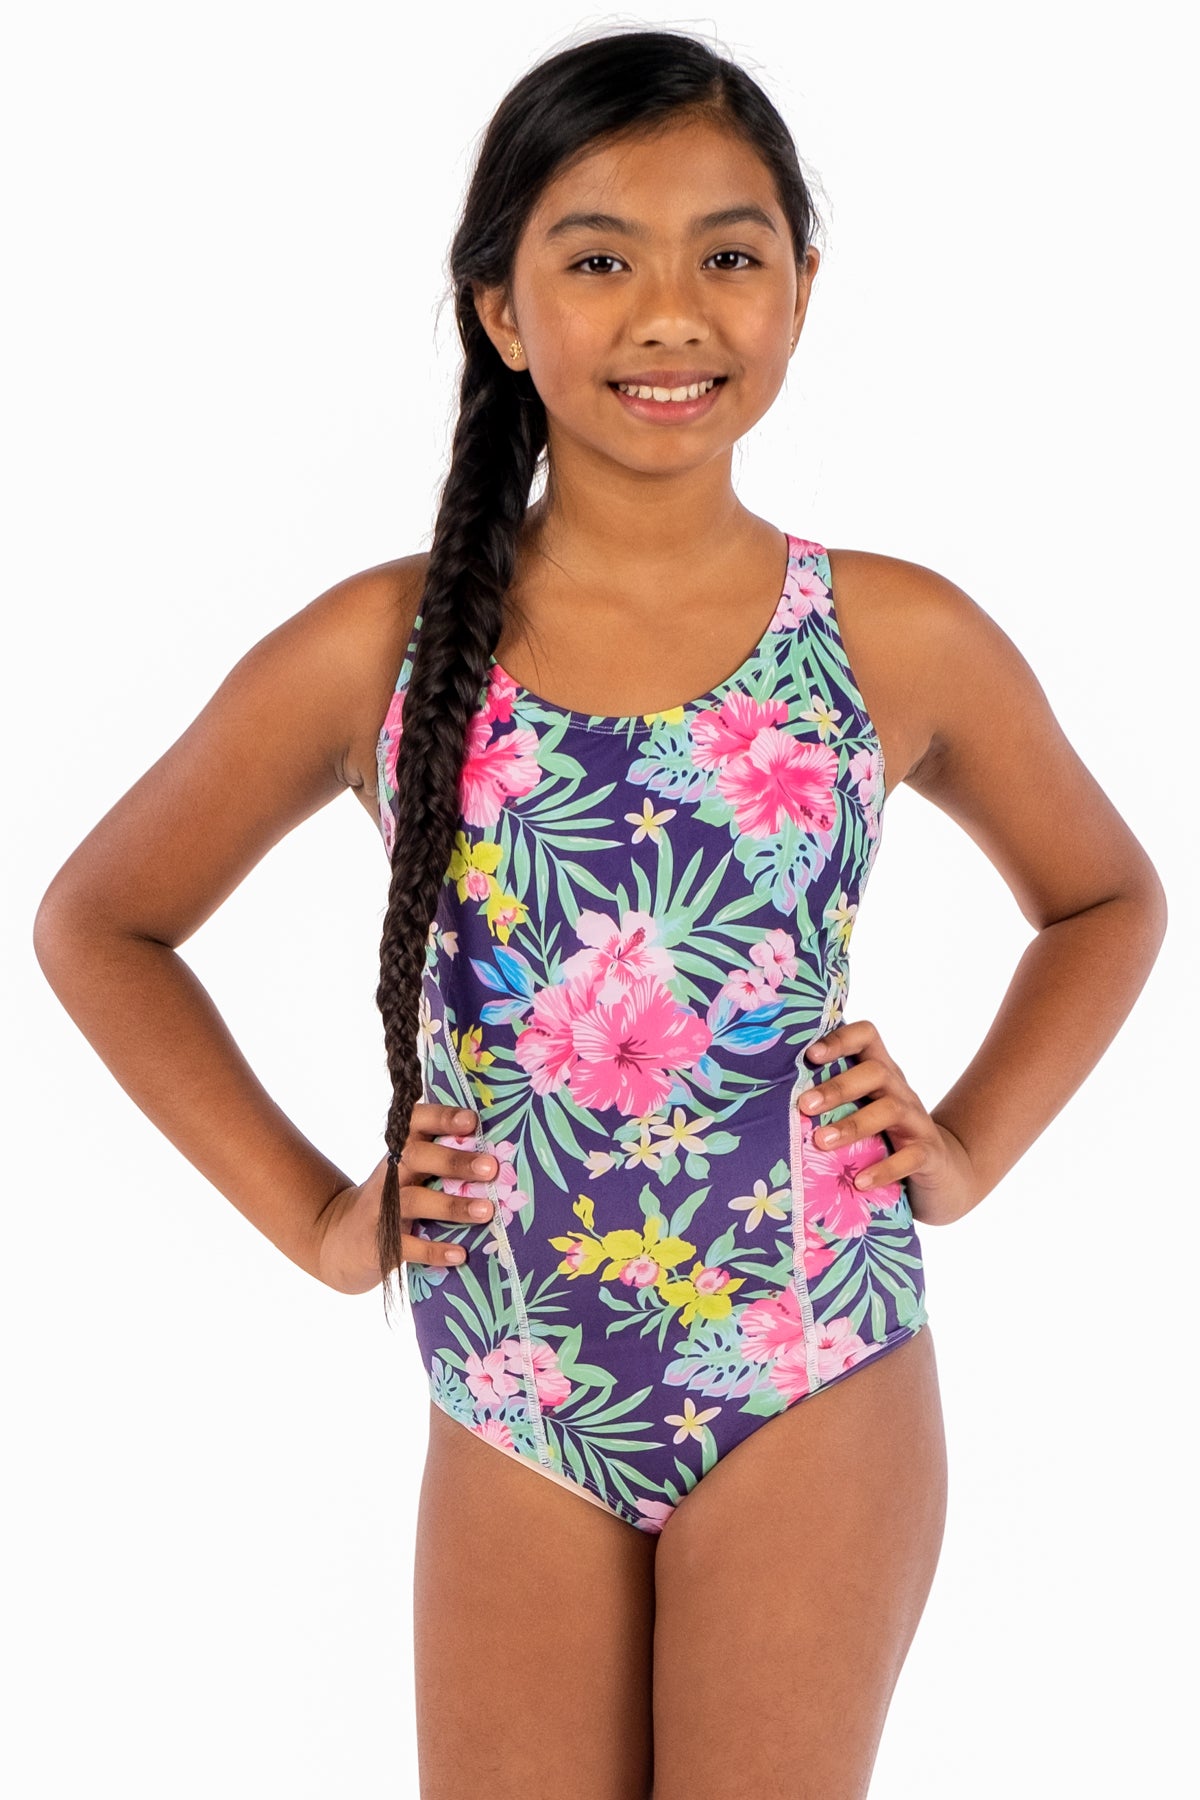 Girls Swimwear Junior Skirted Bathing Suit One Piece Swimsuit Bathers Skirt